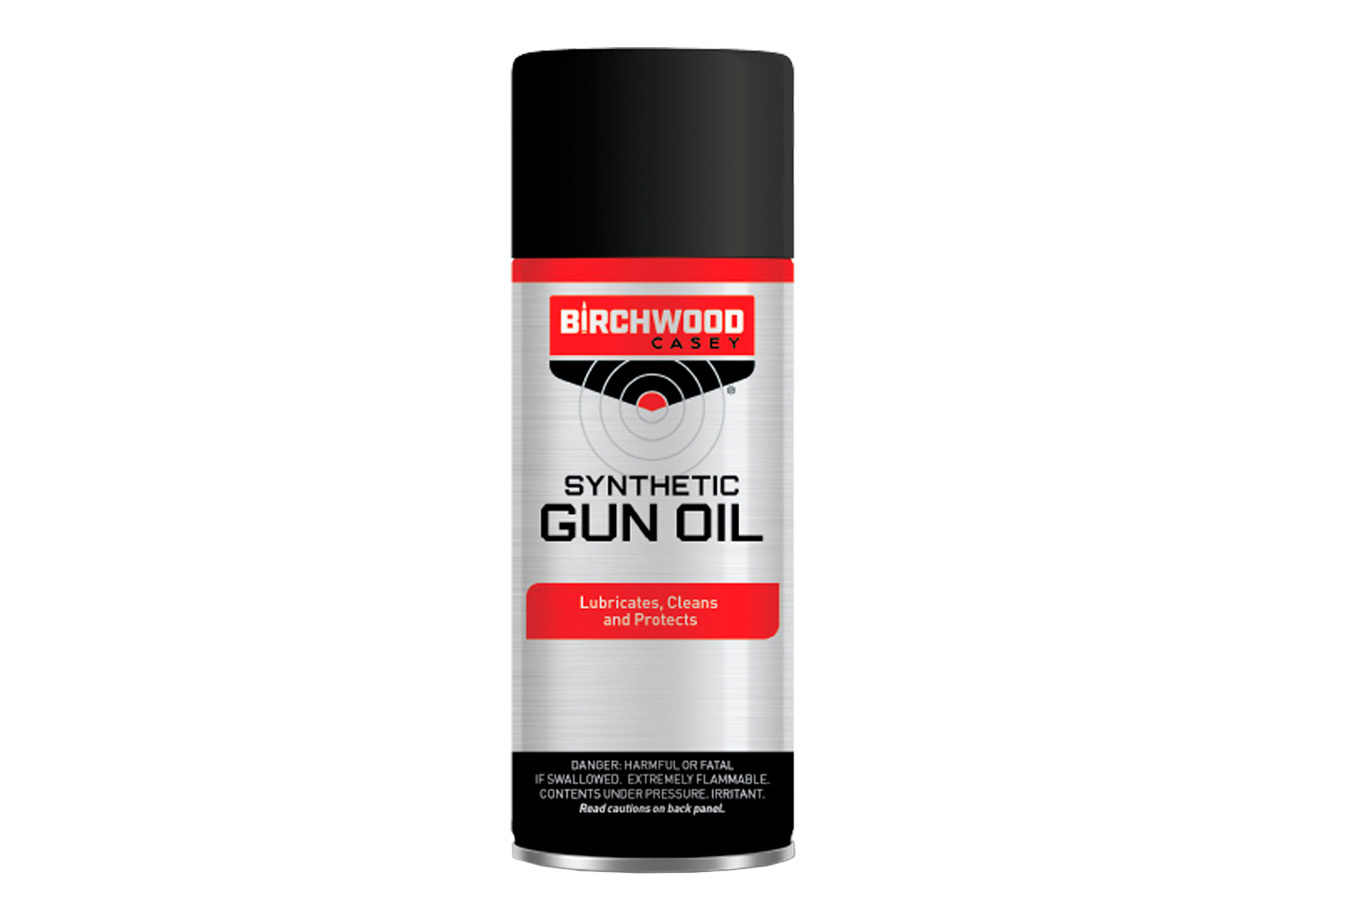 Birchwood Casey Syntheric Gun Oil 1.25oz Aerosol Can